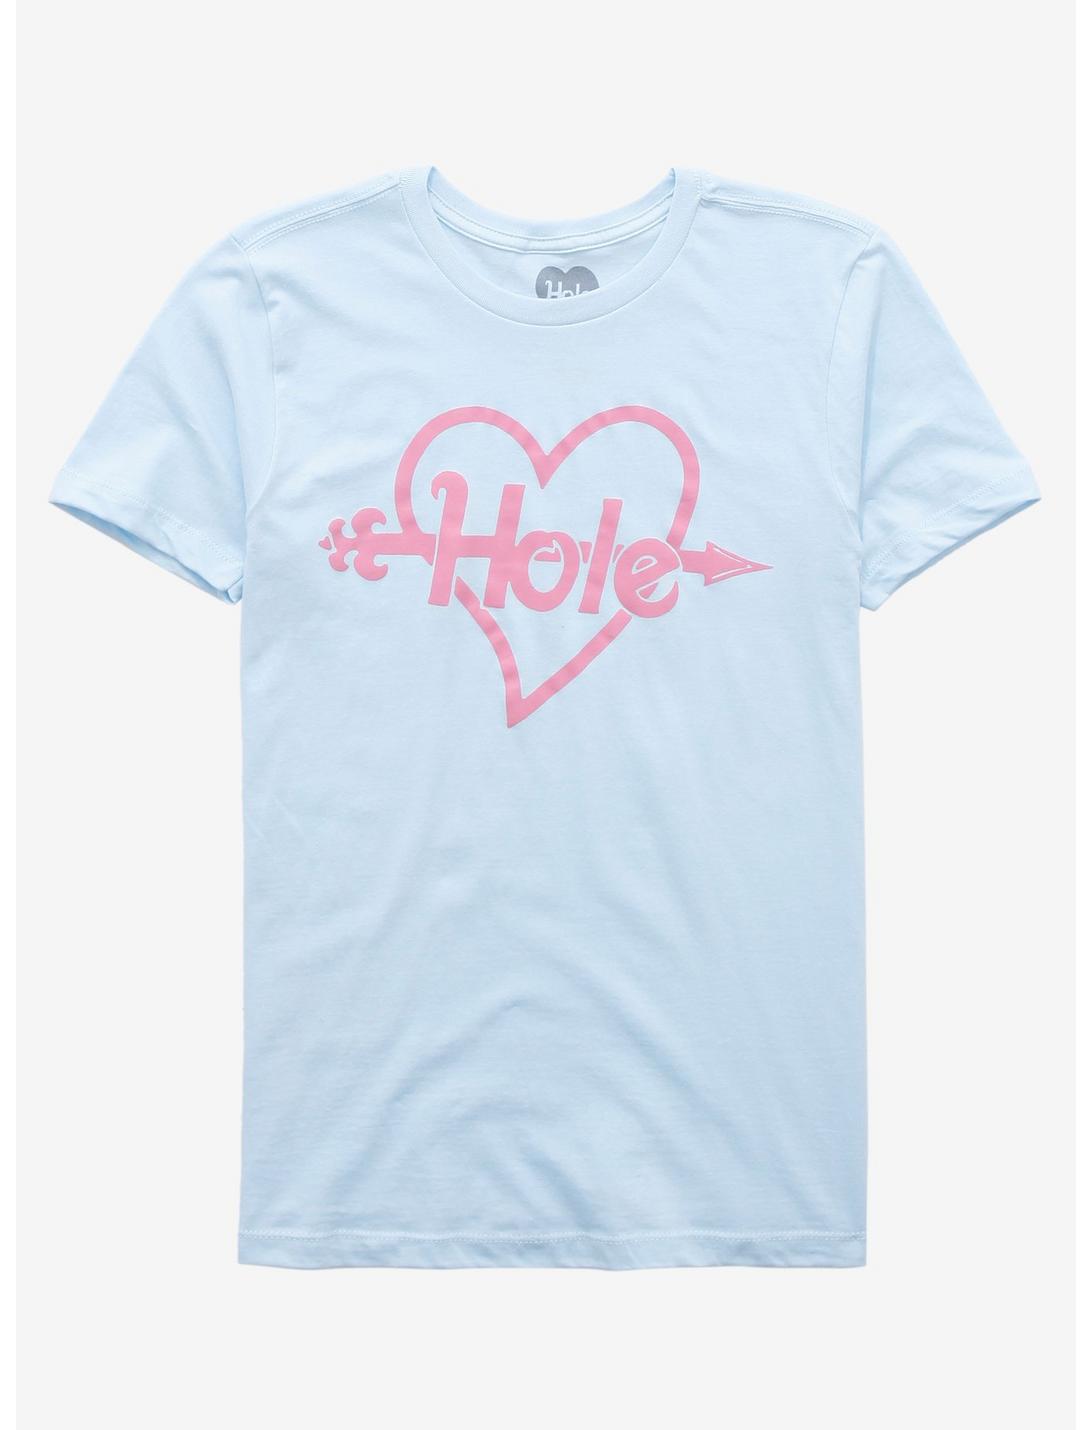 Hole Arrow Heart Girls T-Shirt, BABY BLUE, hi-res